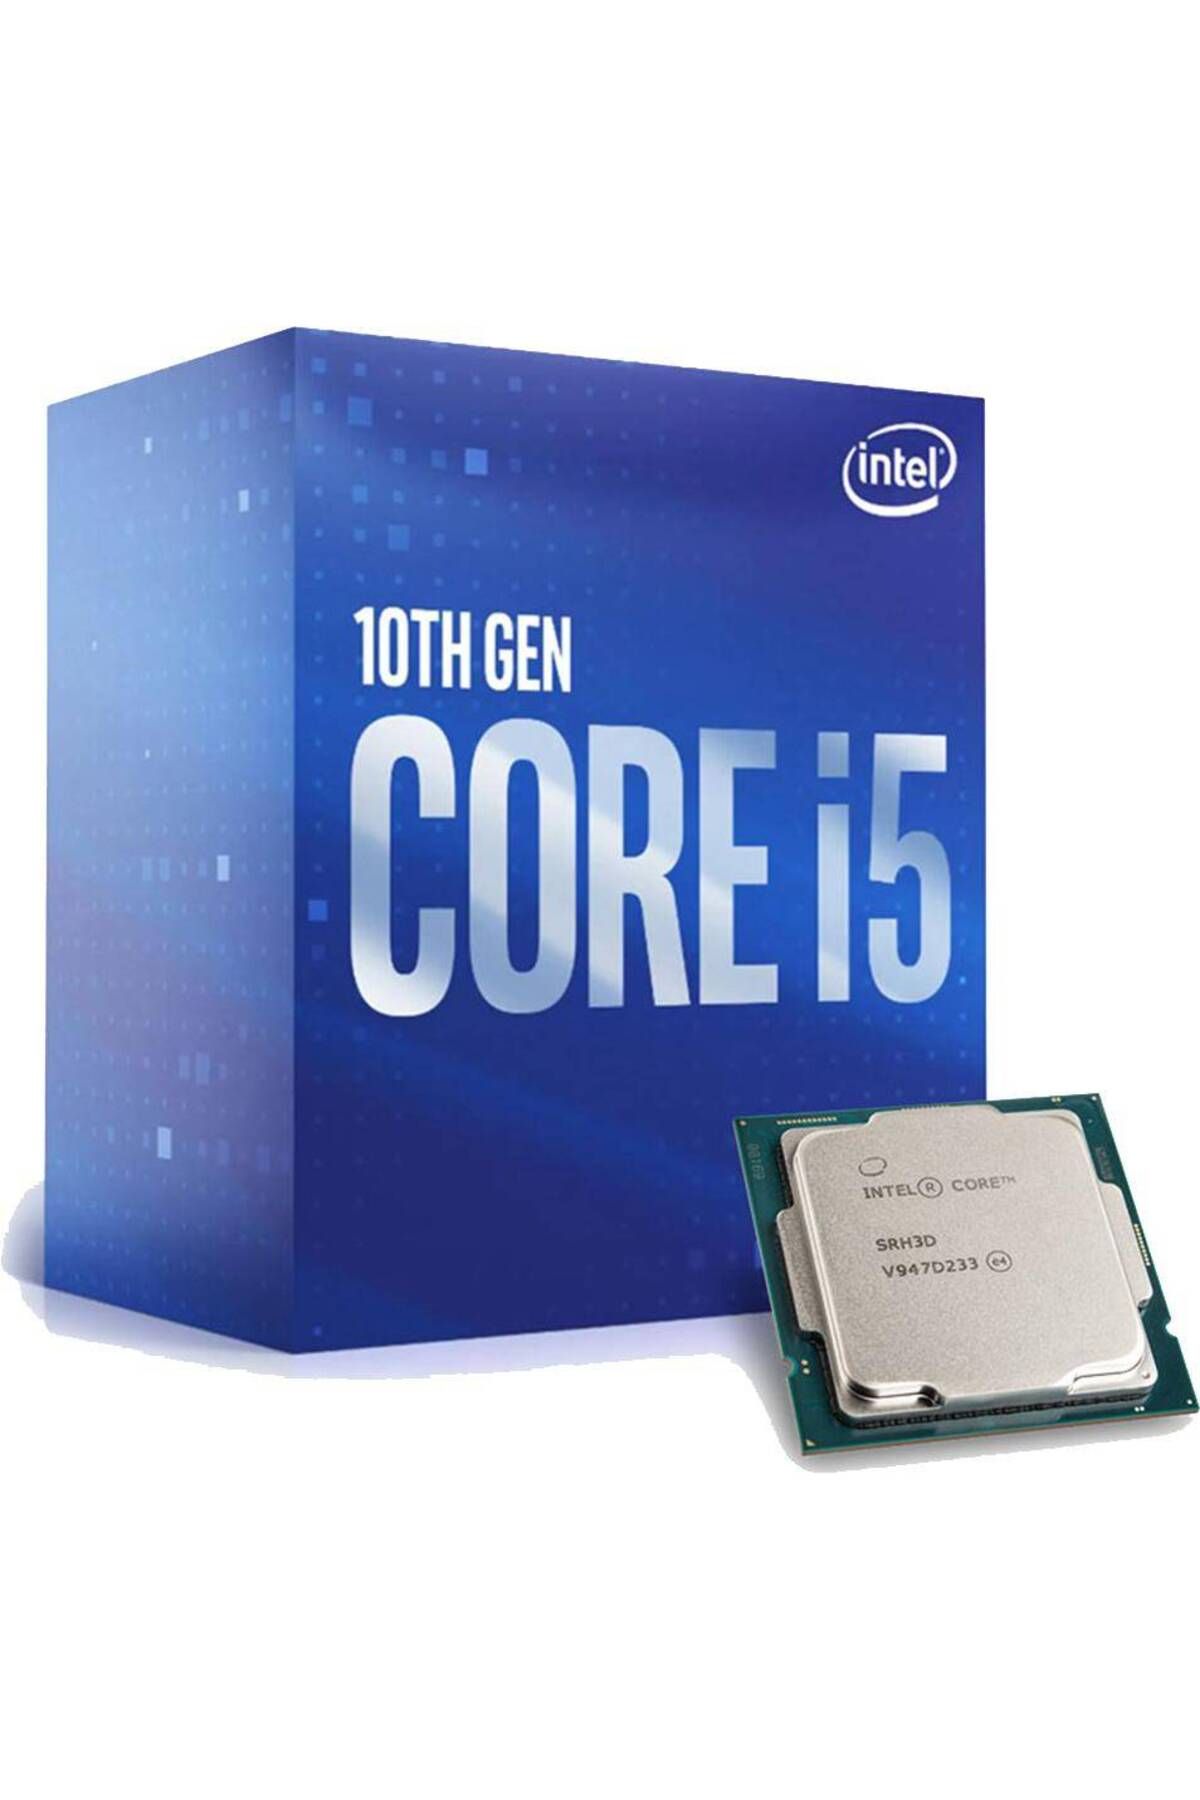 Intel core i5 12400 цены. Процессор Intel Core i3-10100f Box. Процессор Intel Core i5-10400 Box. Процессор Intel Core i3-10100f OEM. Процессор Intel Core i7-10700f Box.